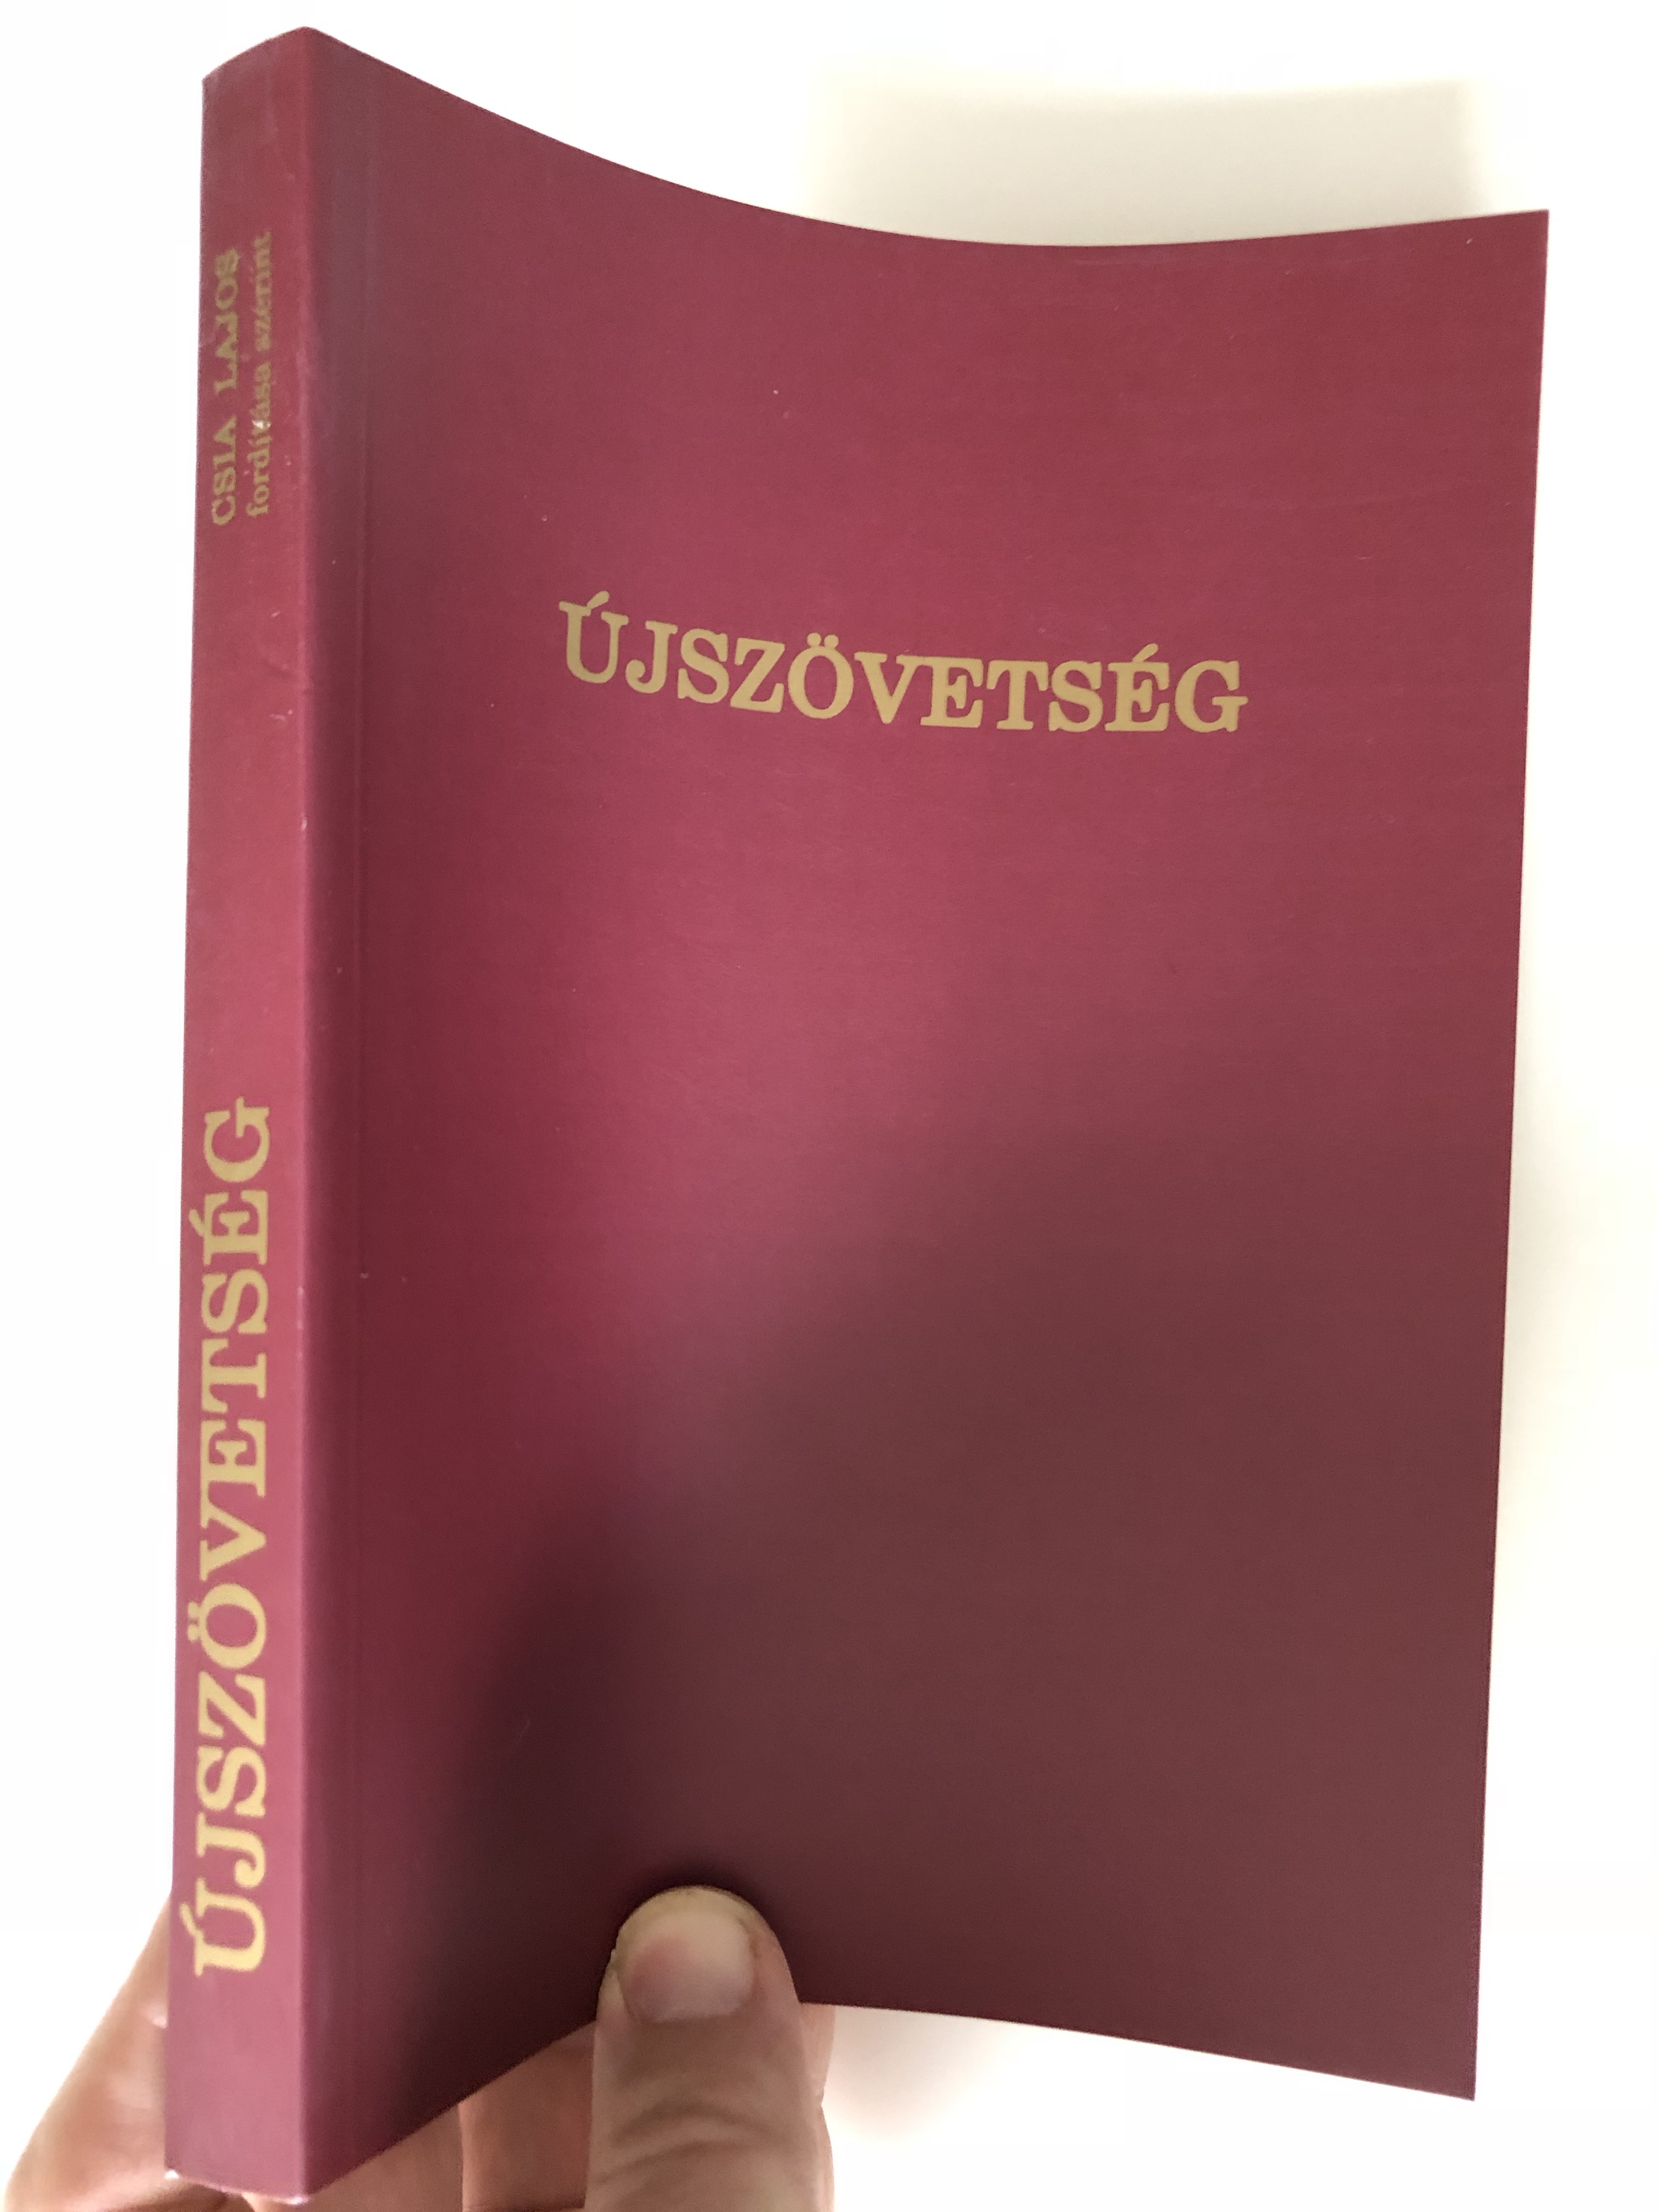 hungarian-new-testament-csia-jsz-vets-g-csia-lajos-fordit-sa-szerint-paperback-1997-3rd-edition-3-.jpg